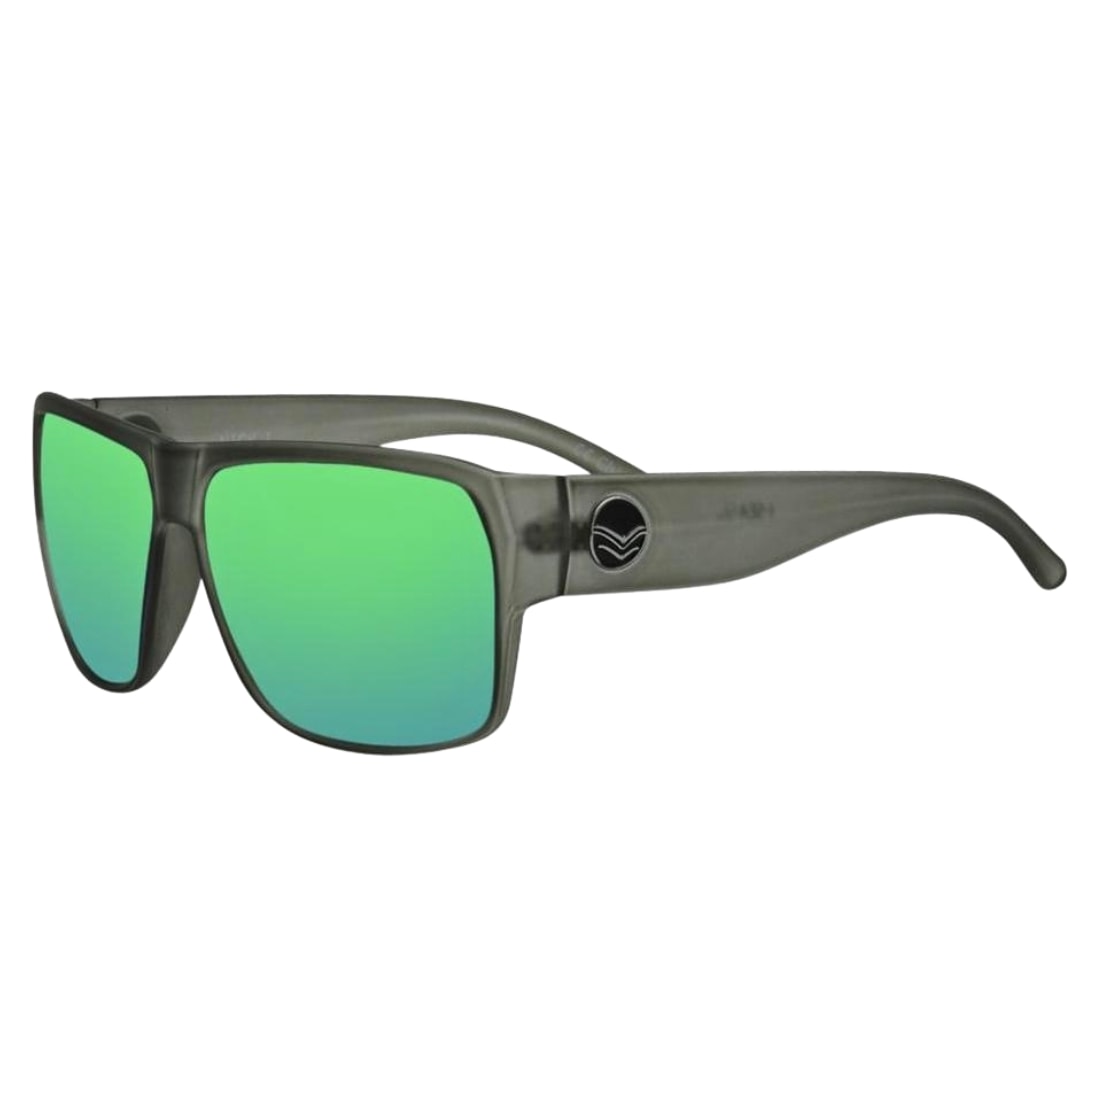 I-Sea Nick I Sunglasses - Gray/Green Polarised - Square/Rectangular Sunglasses by I-Sea